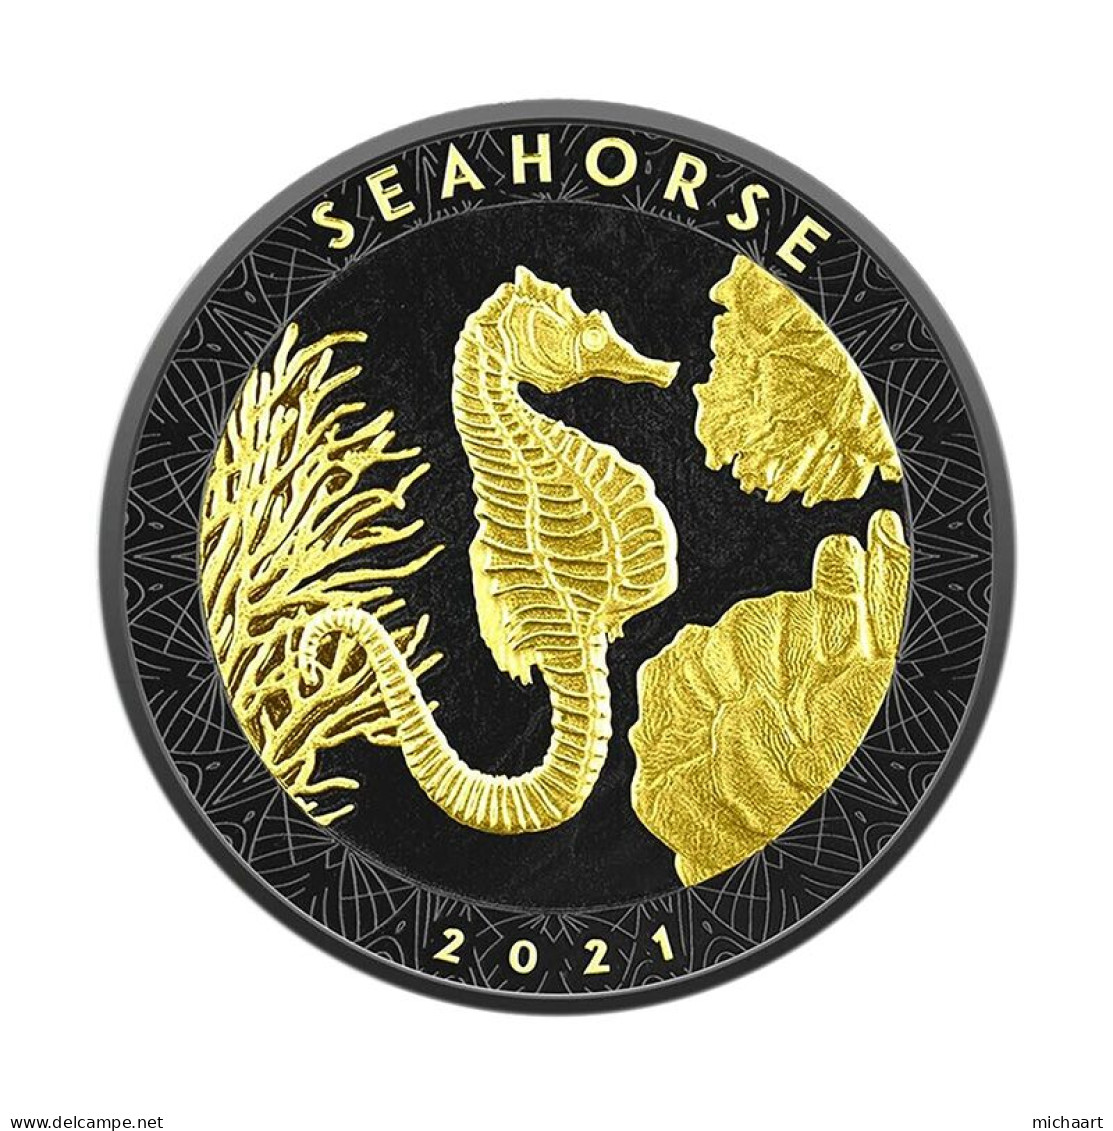 Samoa 2 Tala 2021 Seahorse Silver Coin 1 Oz Gold Black Empire Ruthenium 03201 - Samoa